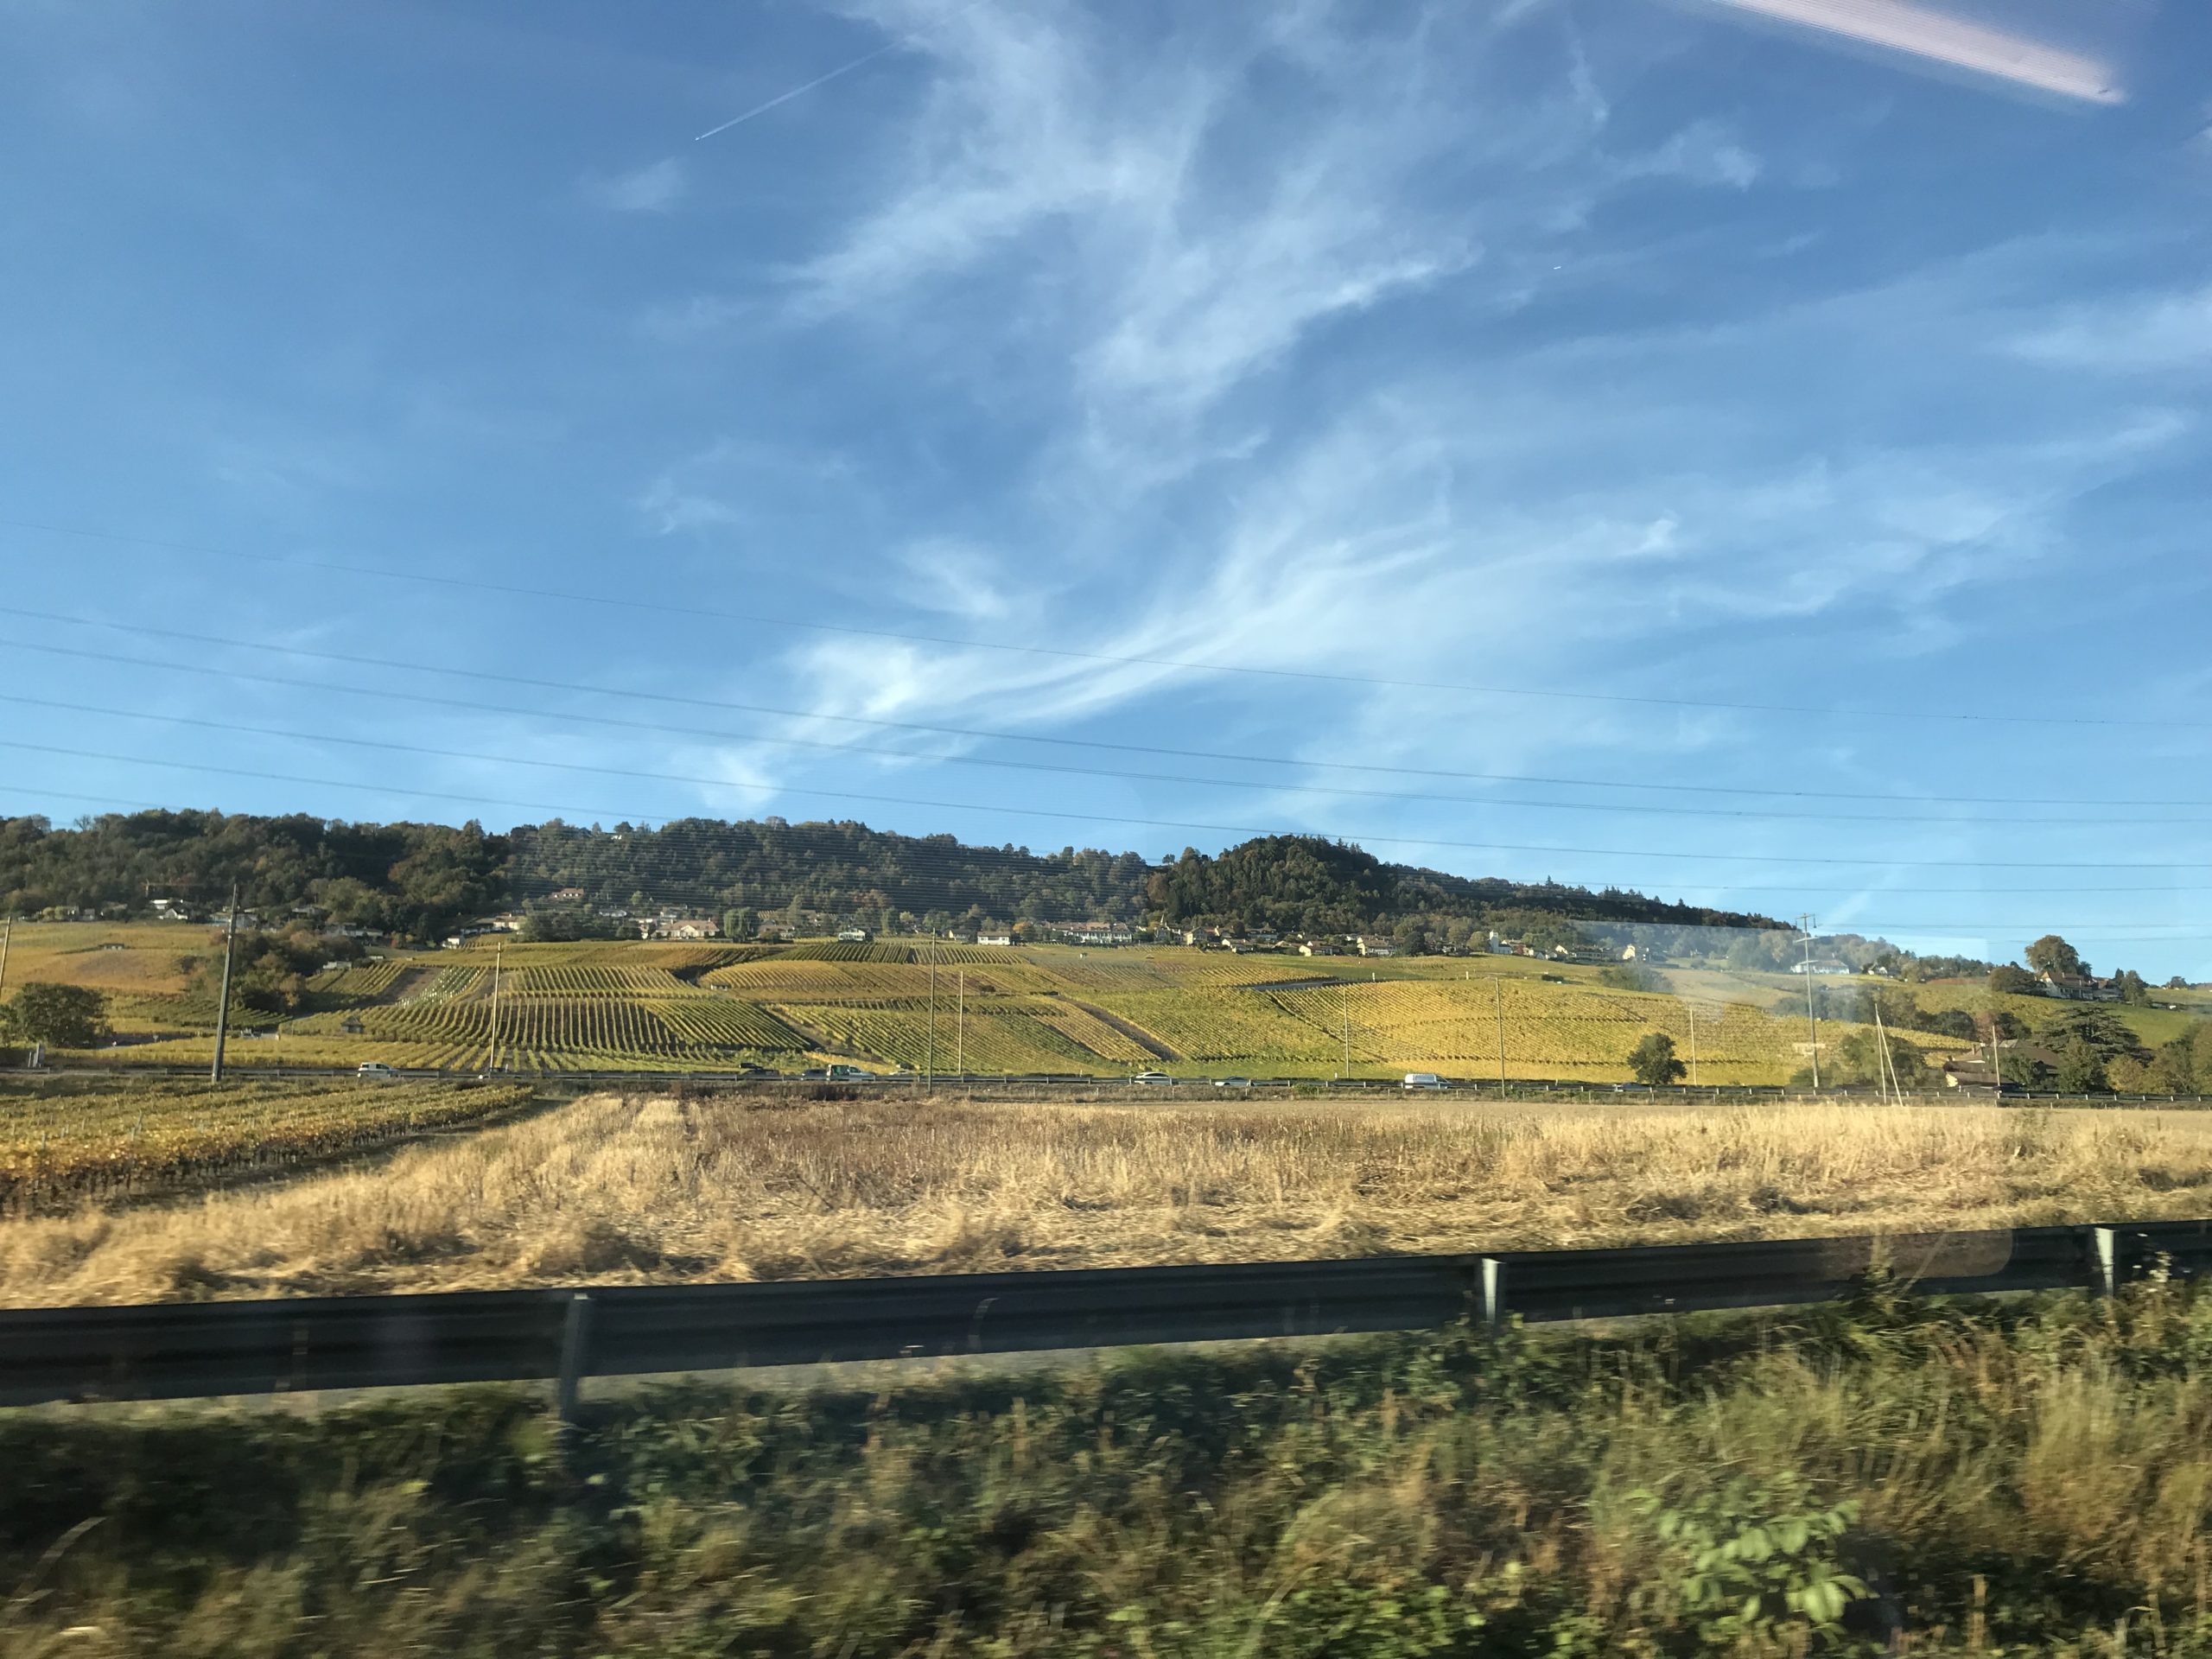 Traveling around Switzerland by train